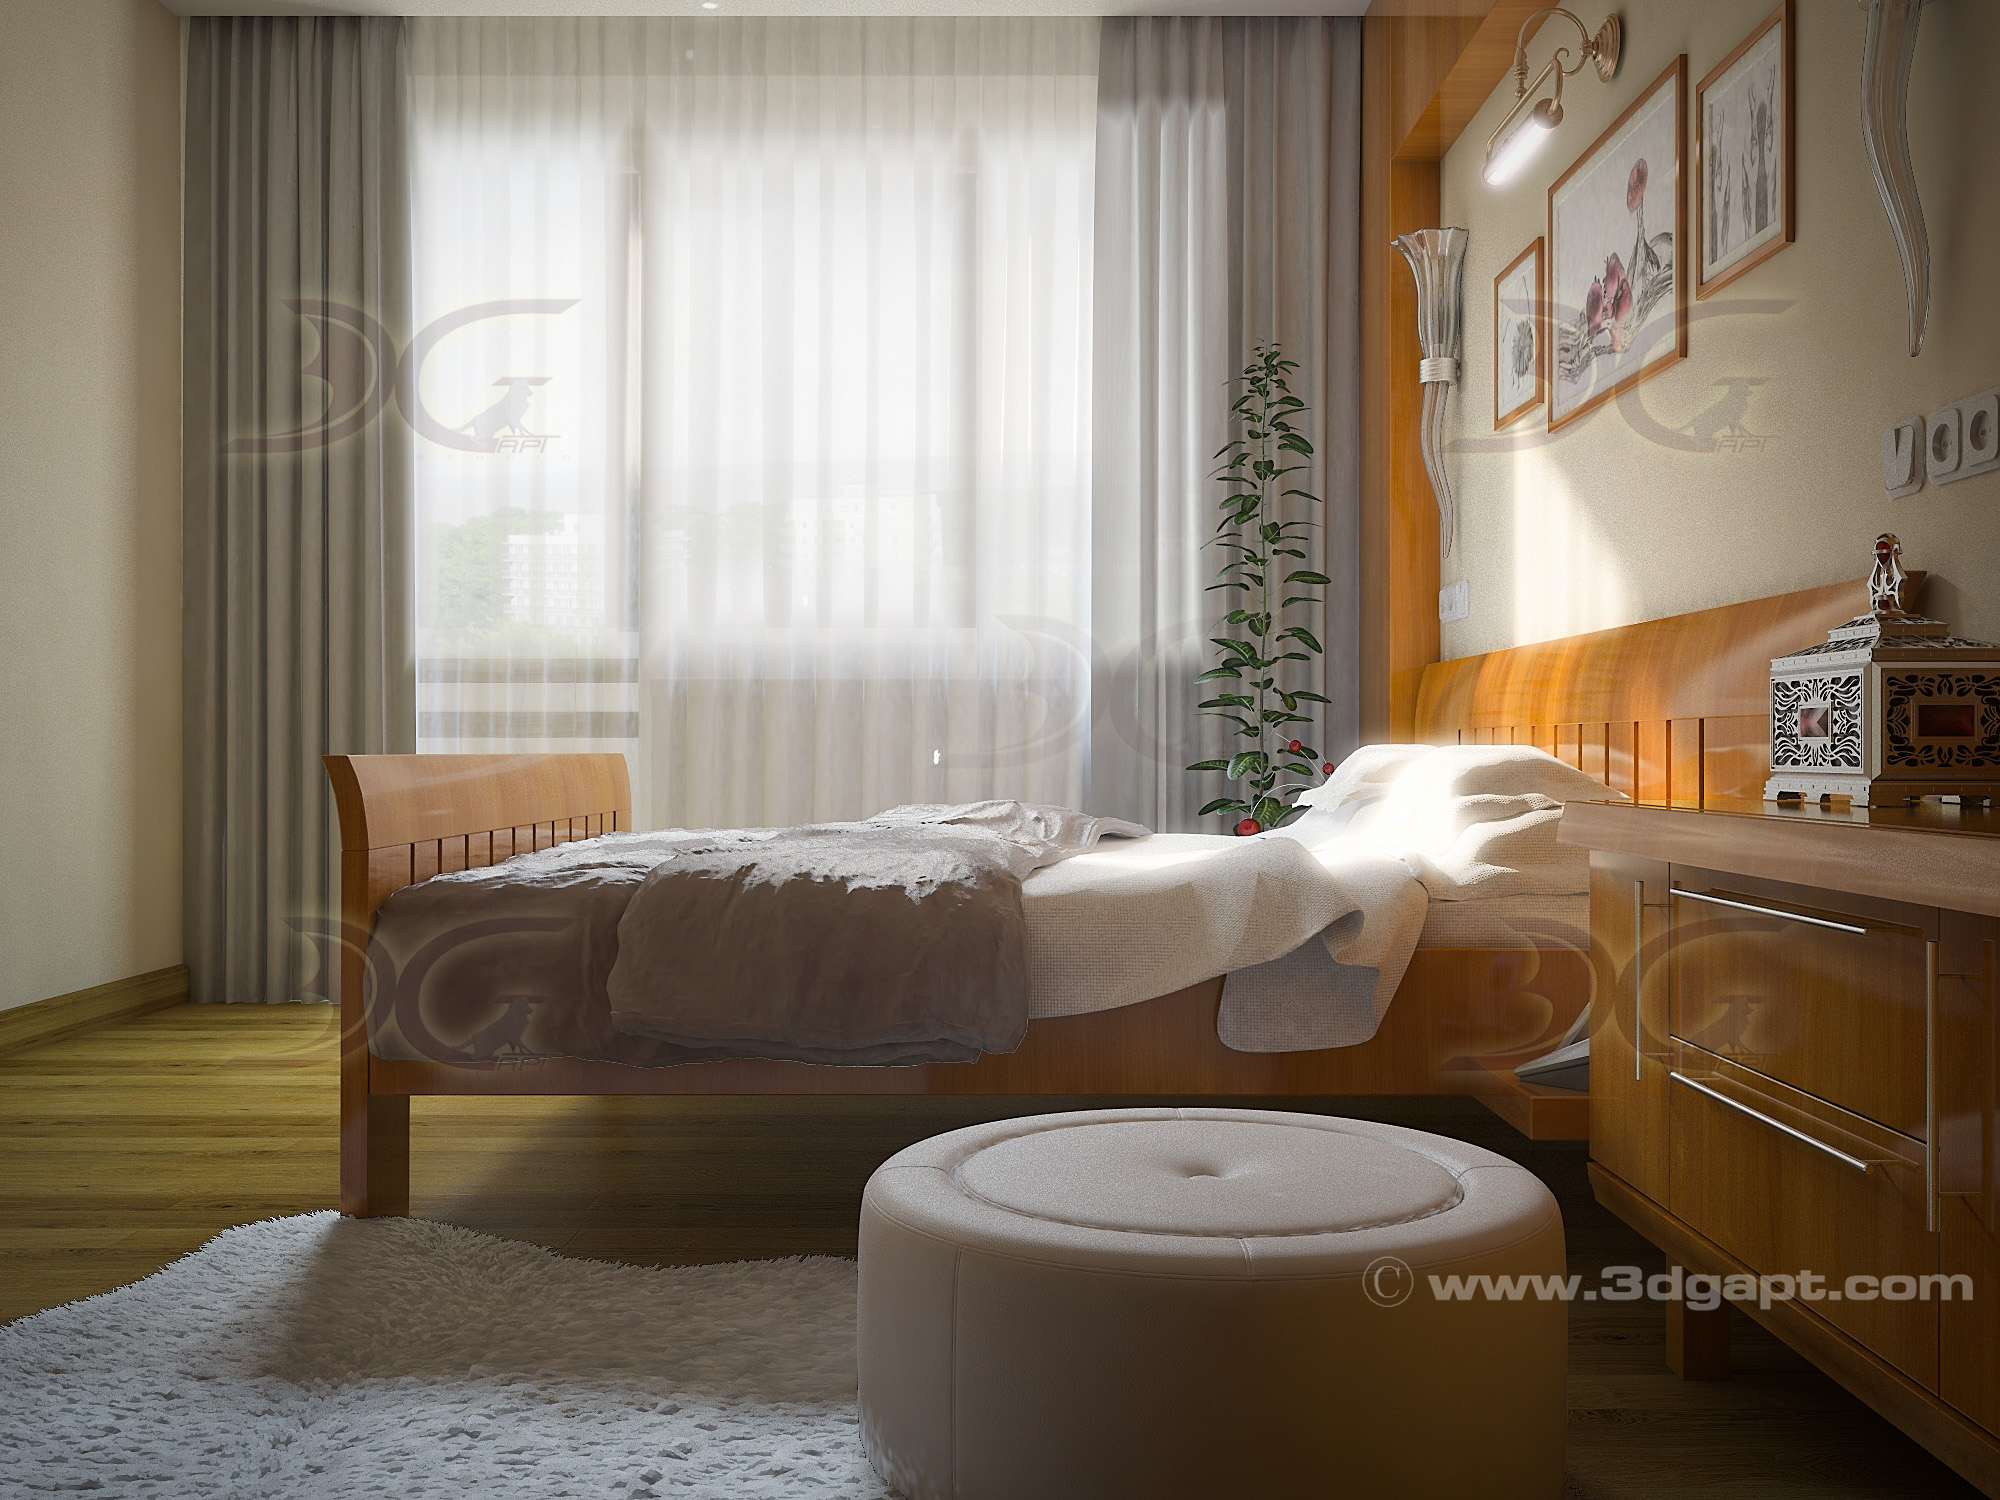 architecture interior bedroom-2 007